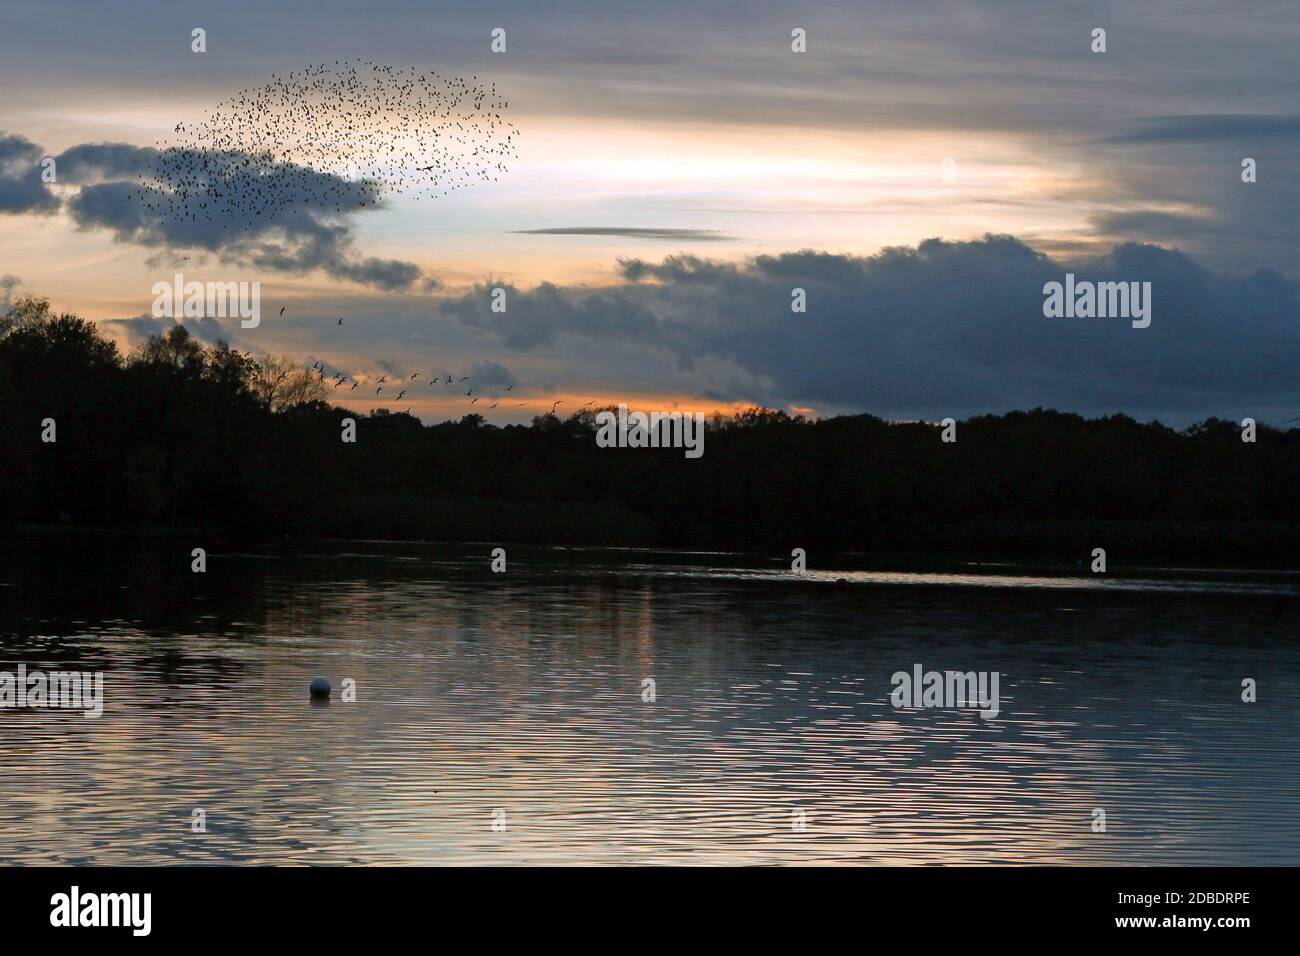 Sunset over lake with flock of birds flying on horizon Stock Photo